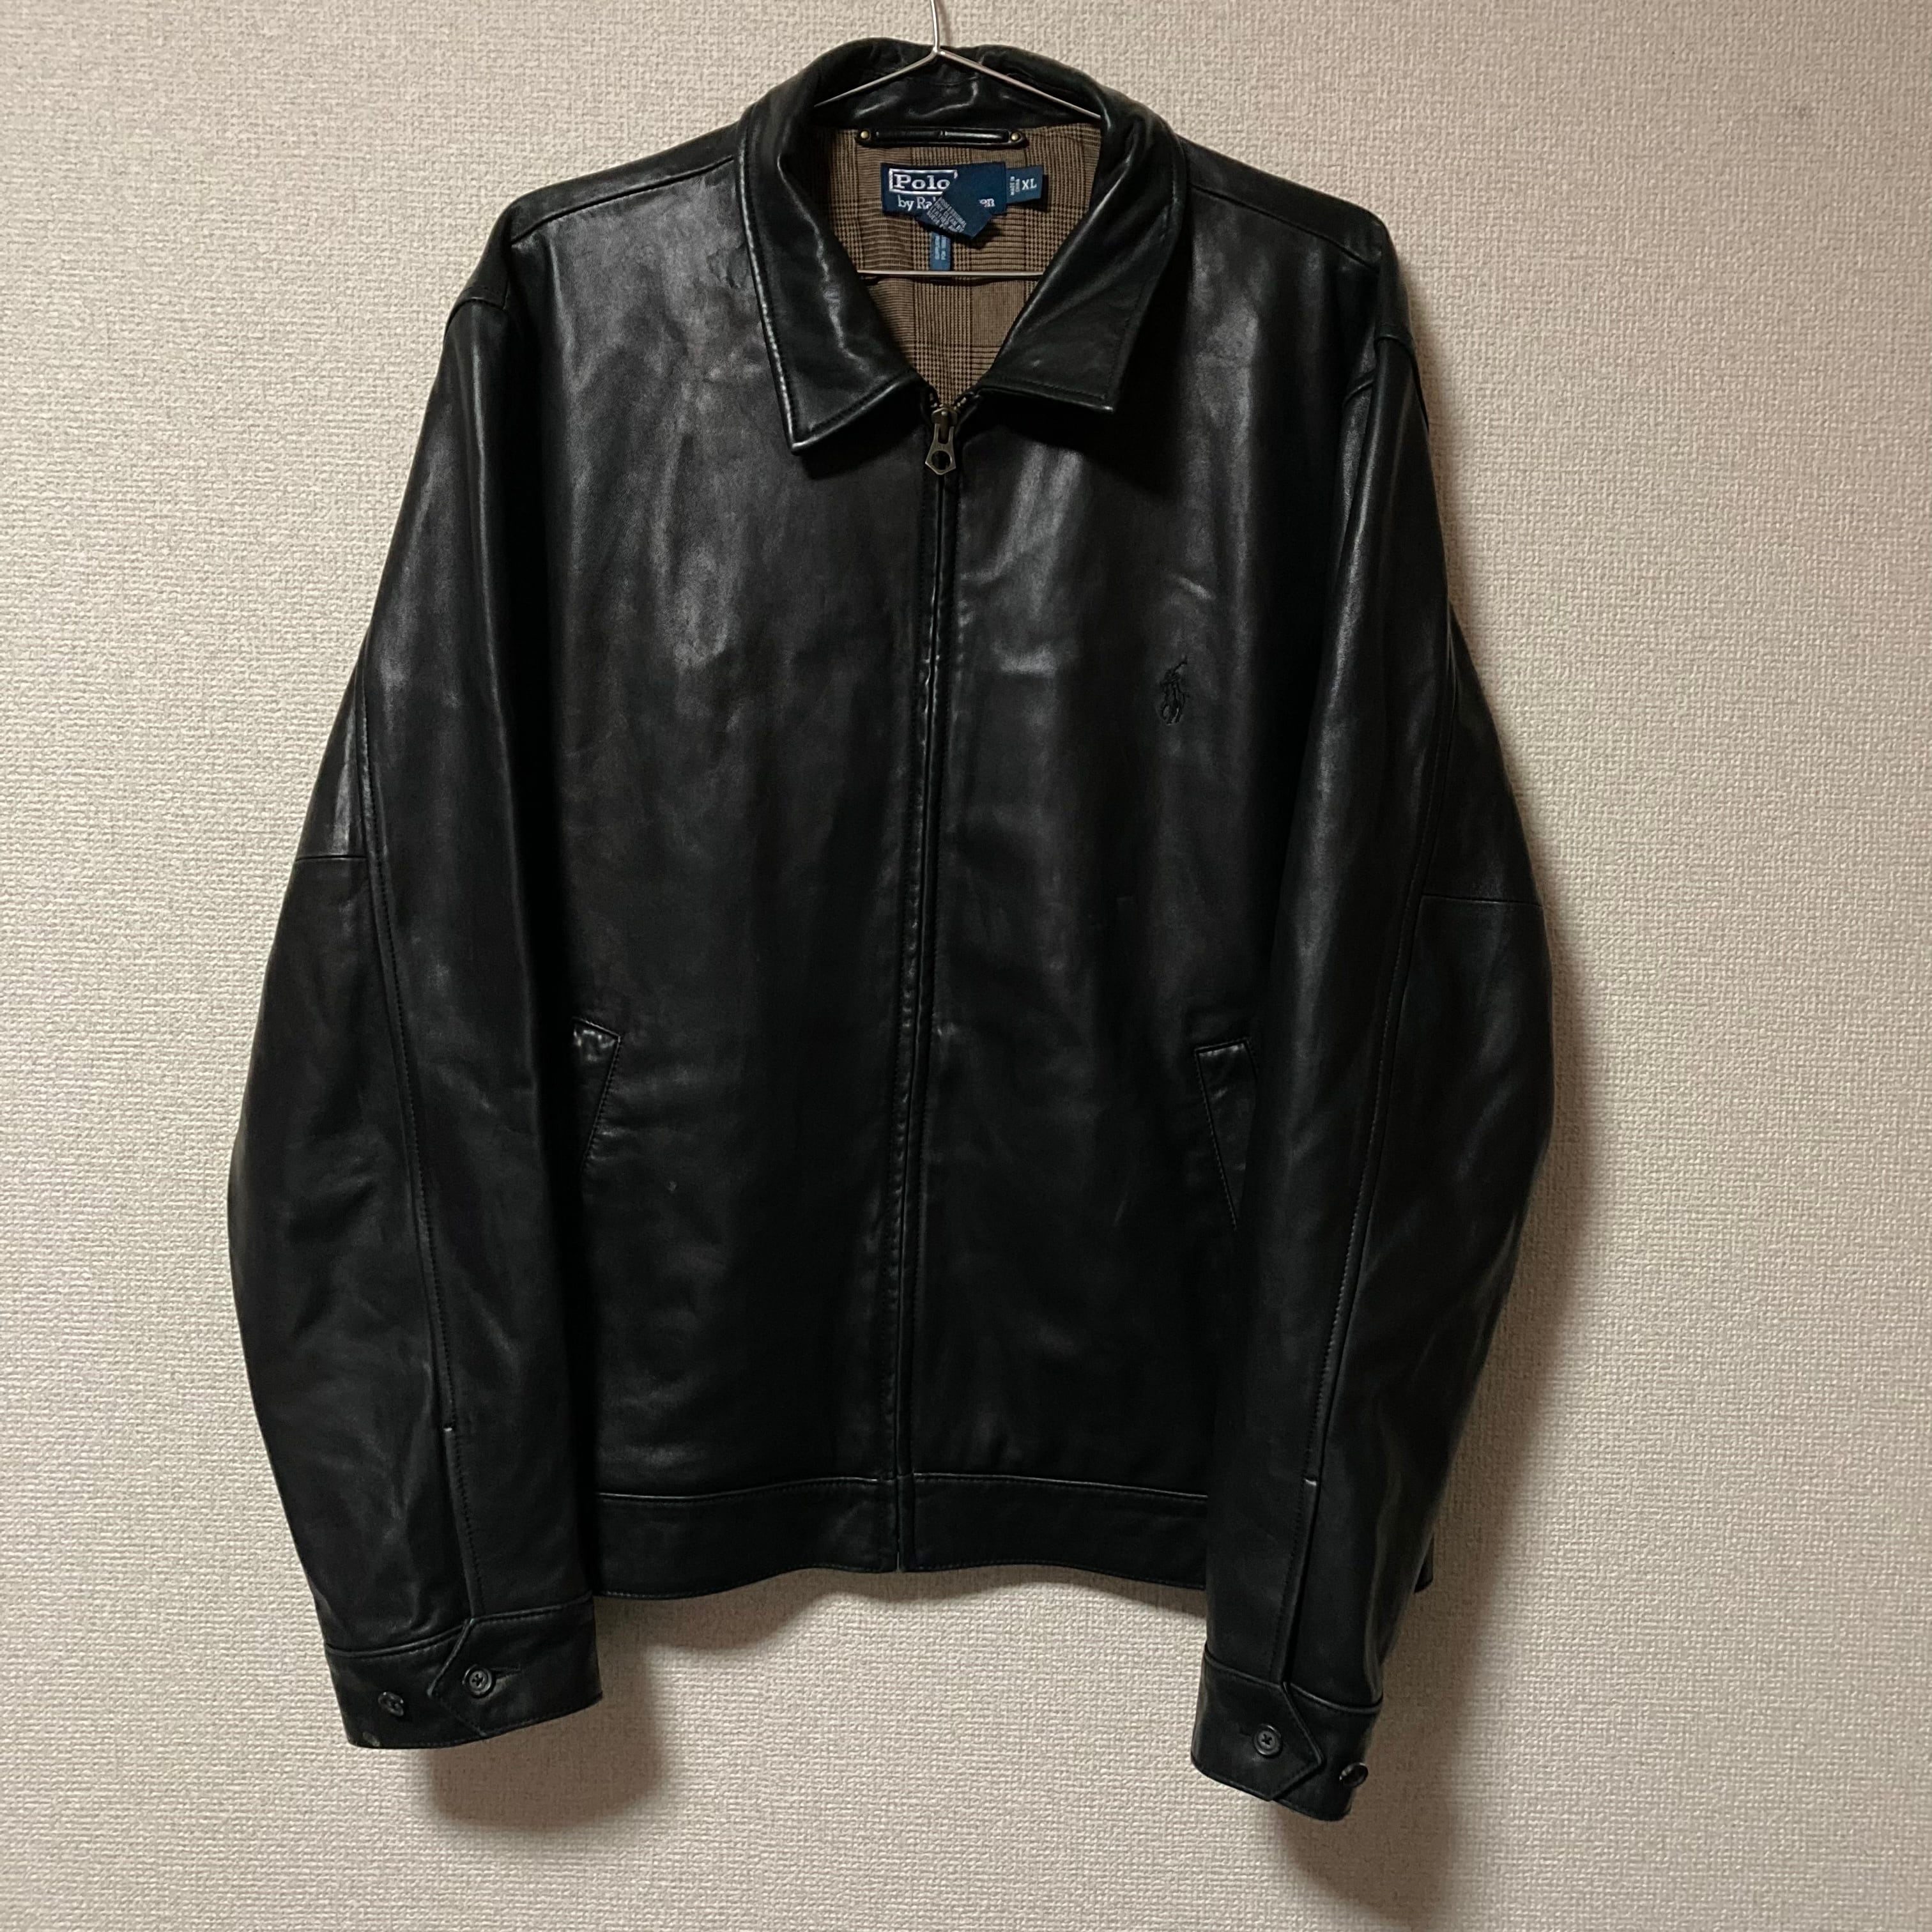 s Polo Ralph Lauren Leather Jacket Swing Top “Black”   Big Apple